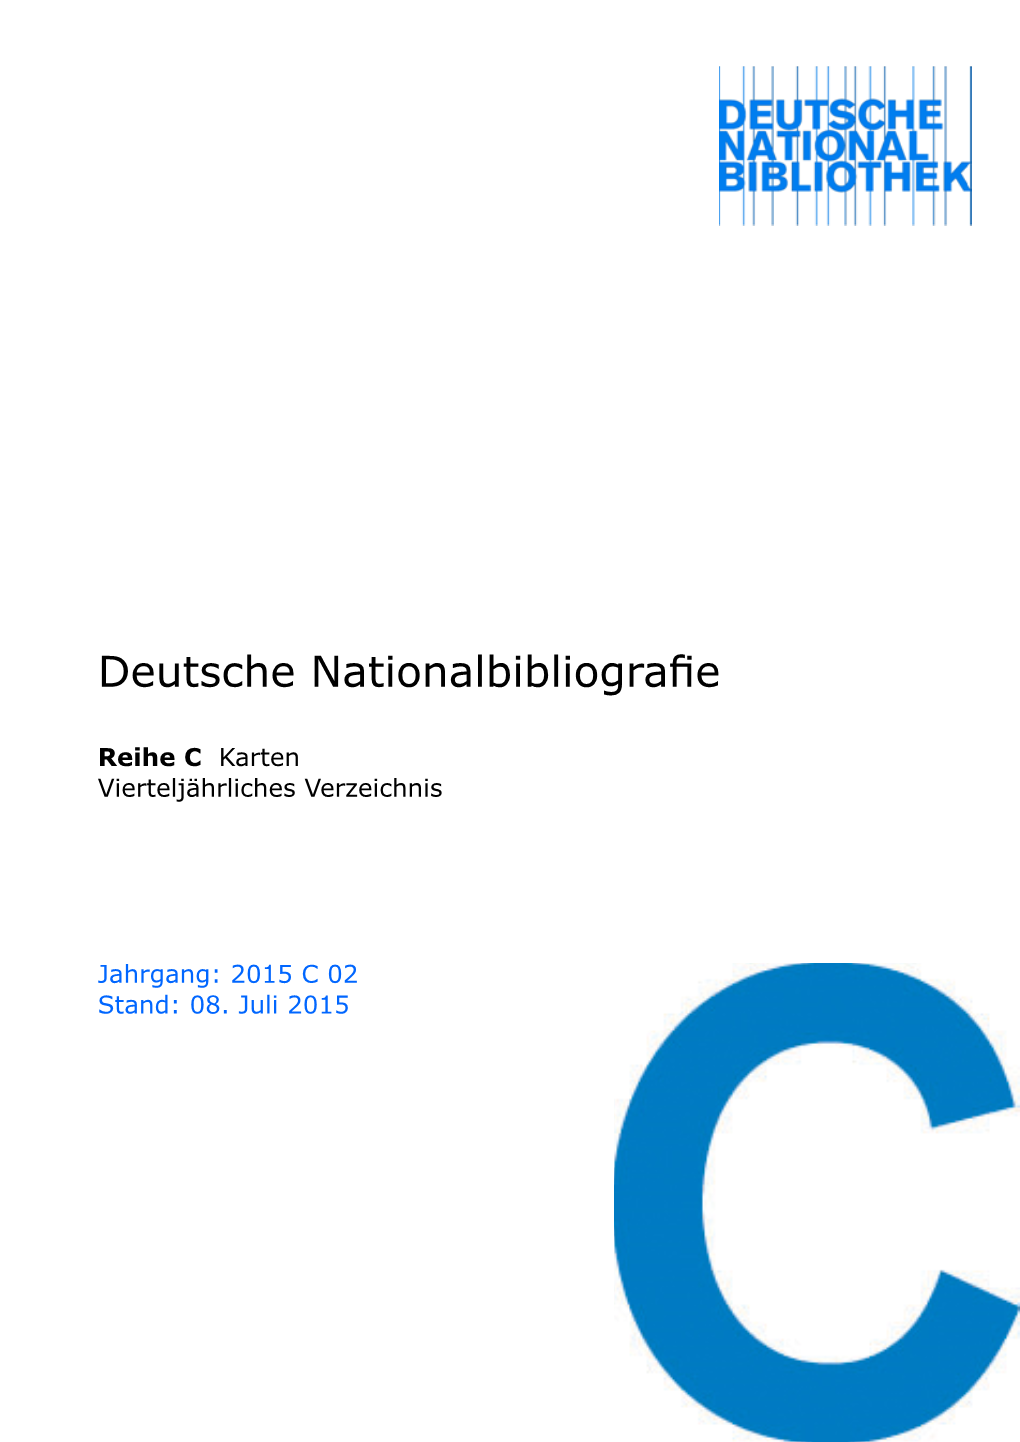 Deutsche Nationalbibliografie 2015 C 02